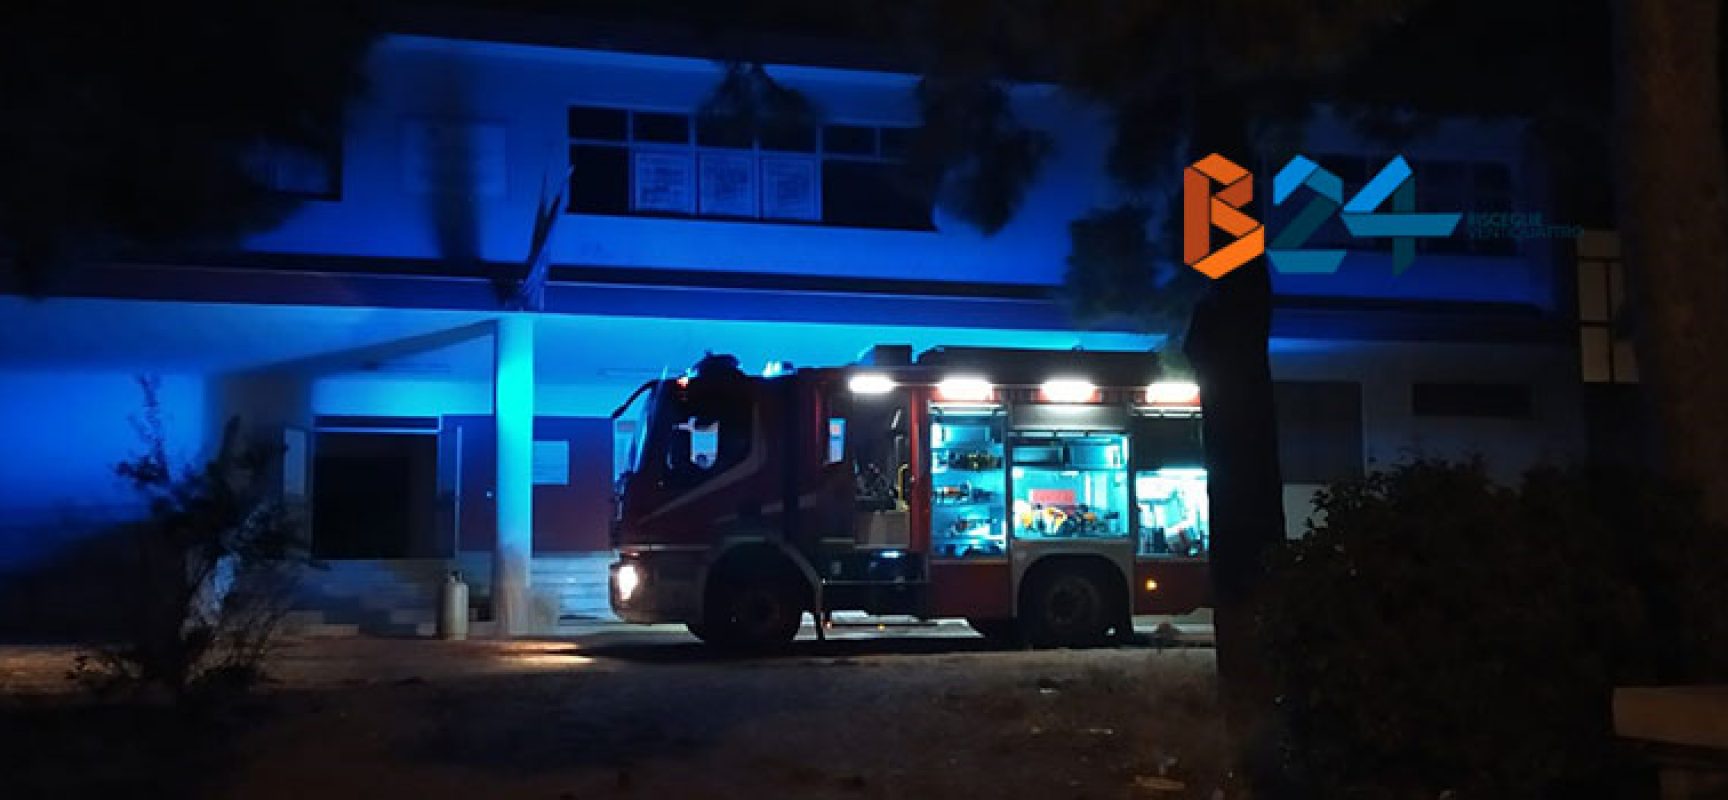 Incendio all’Istituto Superiore “Sergio Cosmai”